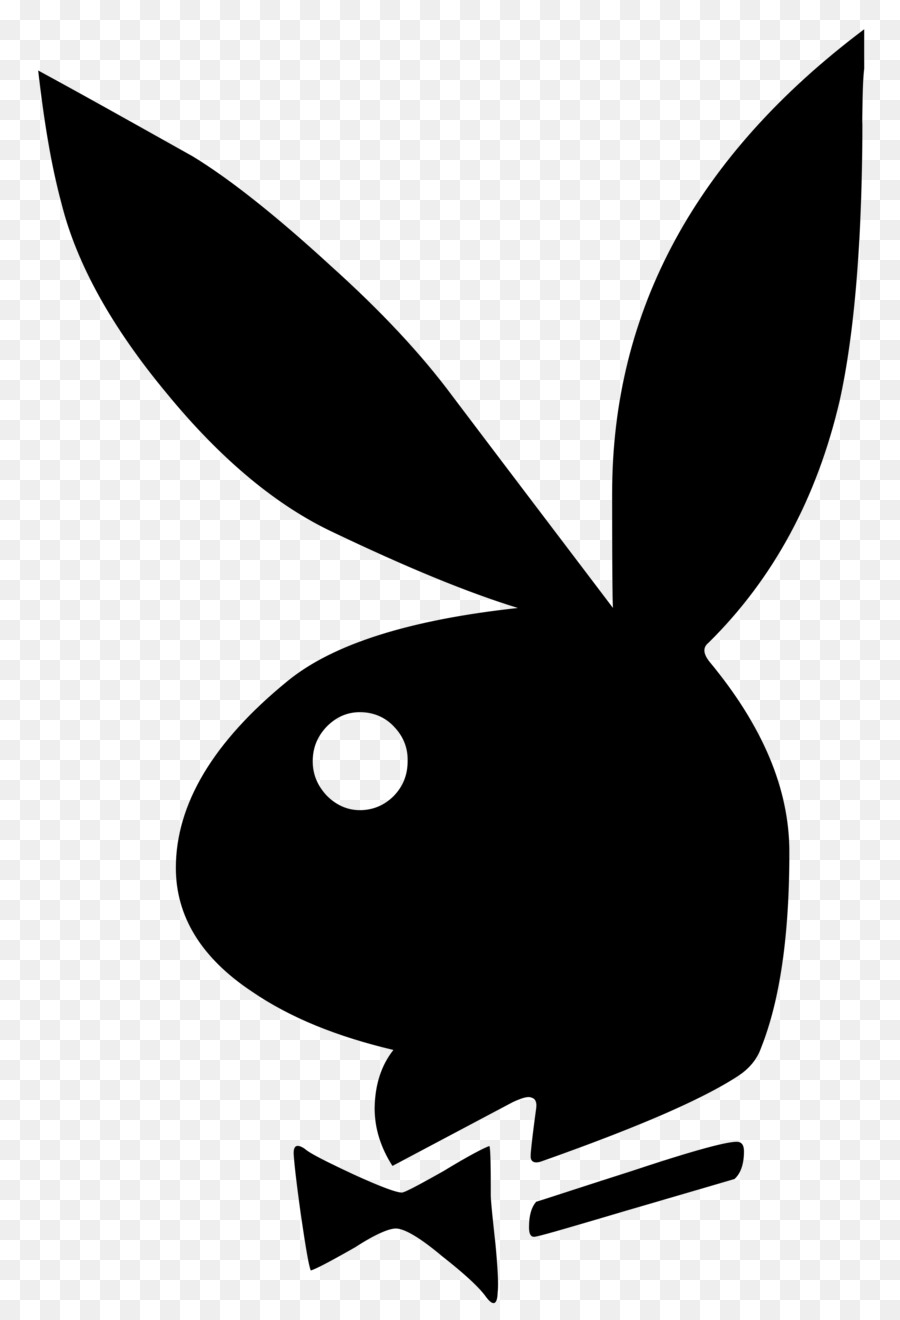 Playboy Mansion Logo Playboy Bunny Playboy Enterprises - bunny rabbit png download - 4017*5865 - Free Transparent  png Download.